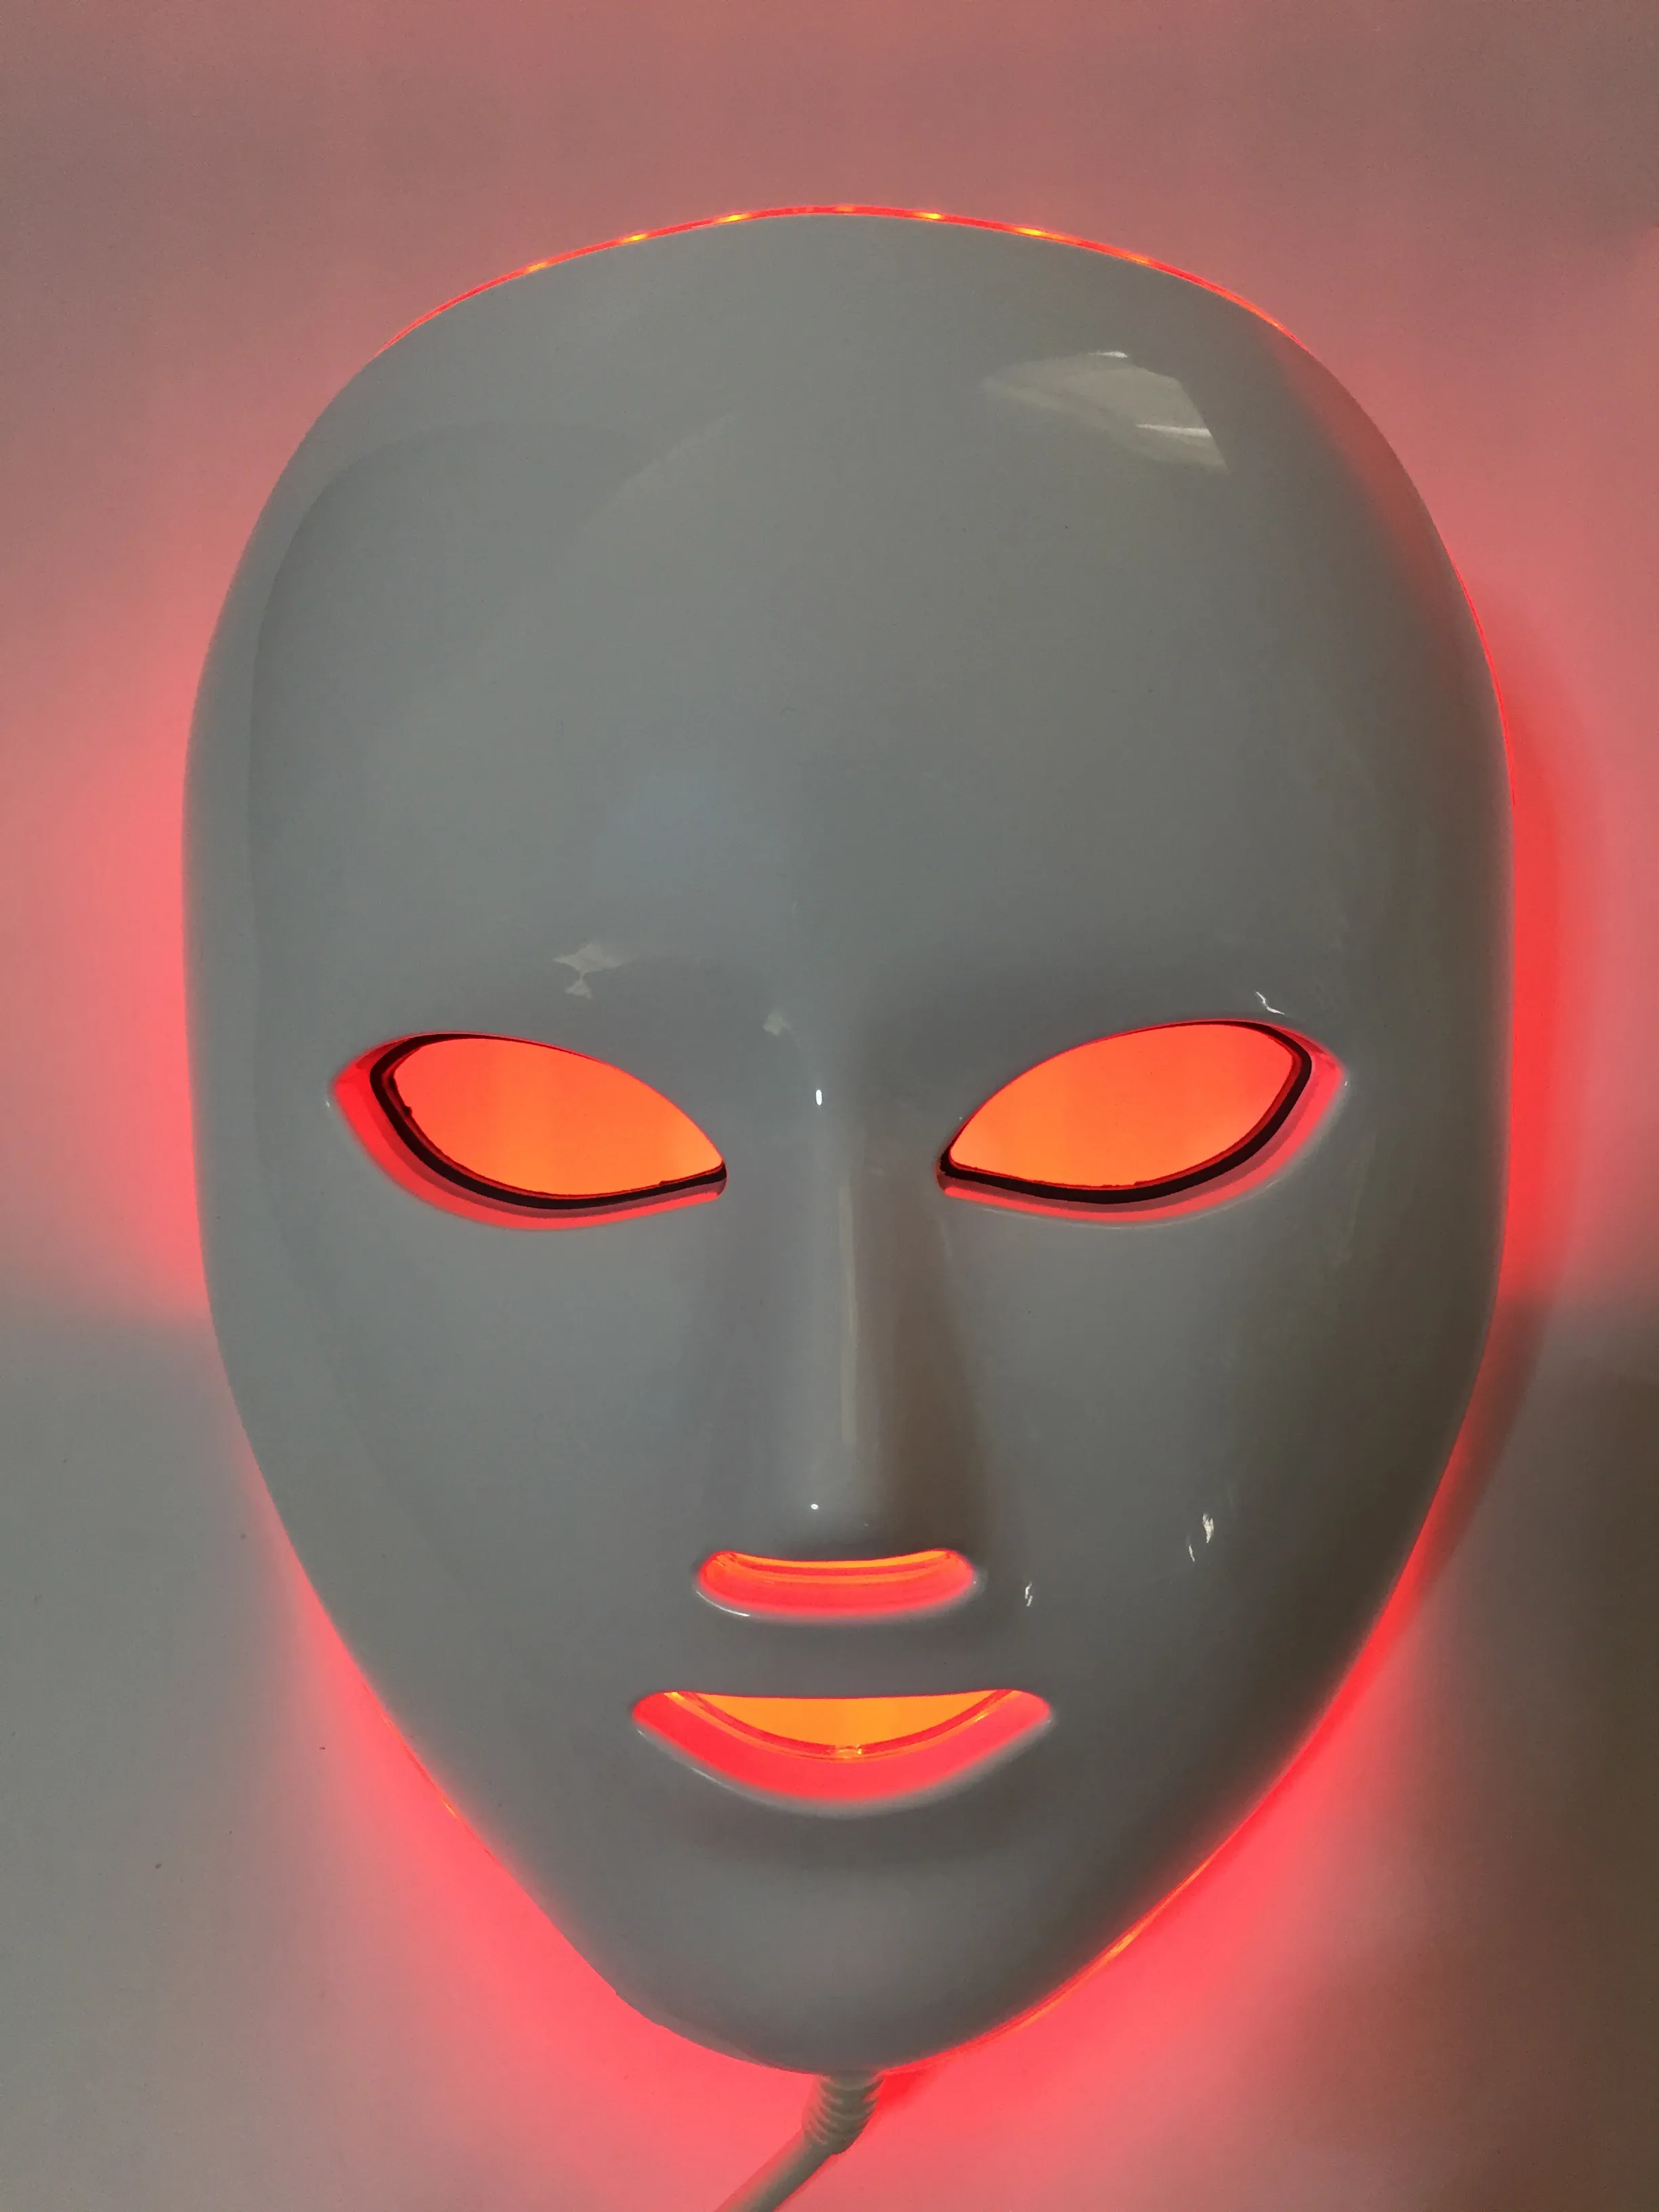 7 Cores photon PDT fotodinâmica máscara facial rejuvenescimento da pele facial removedor de rugas pele aperto beleza máquina